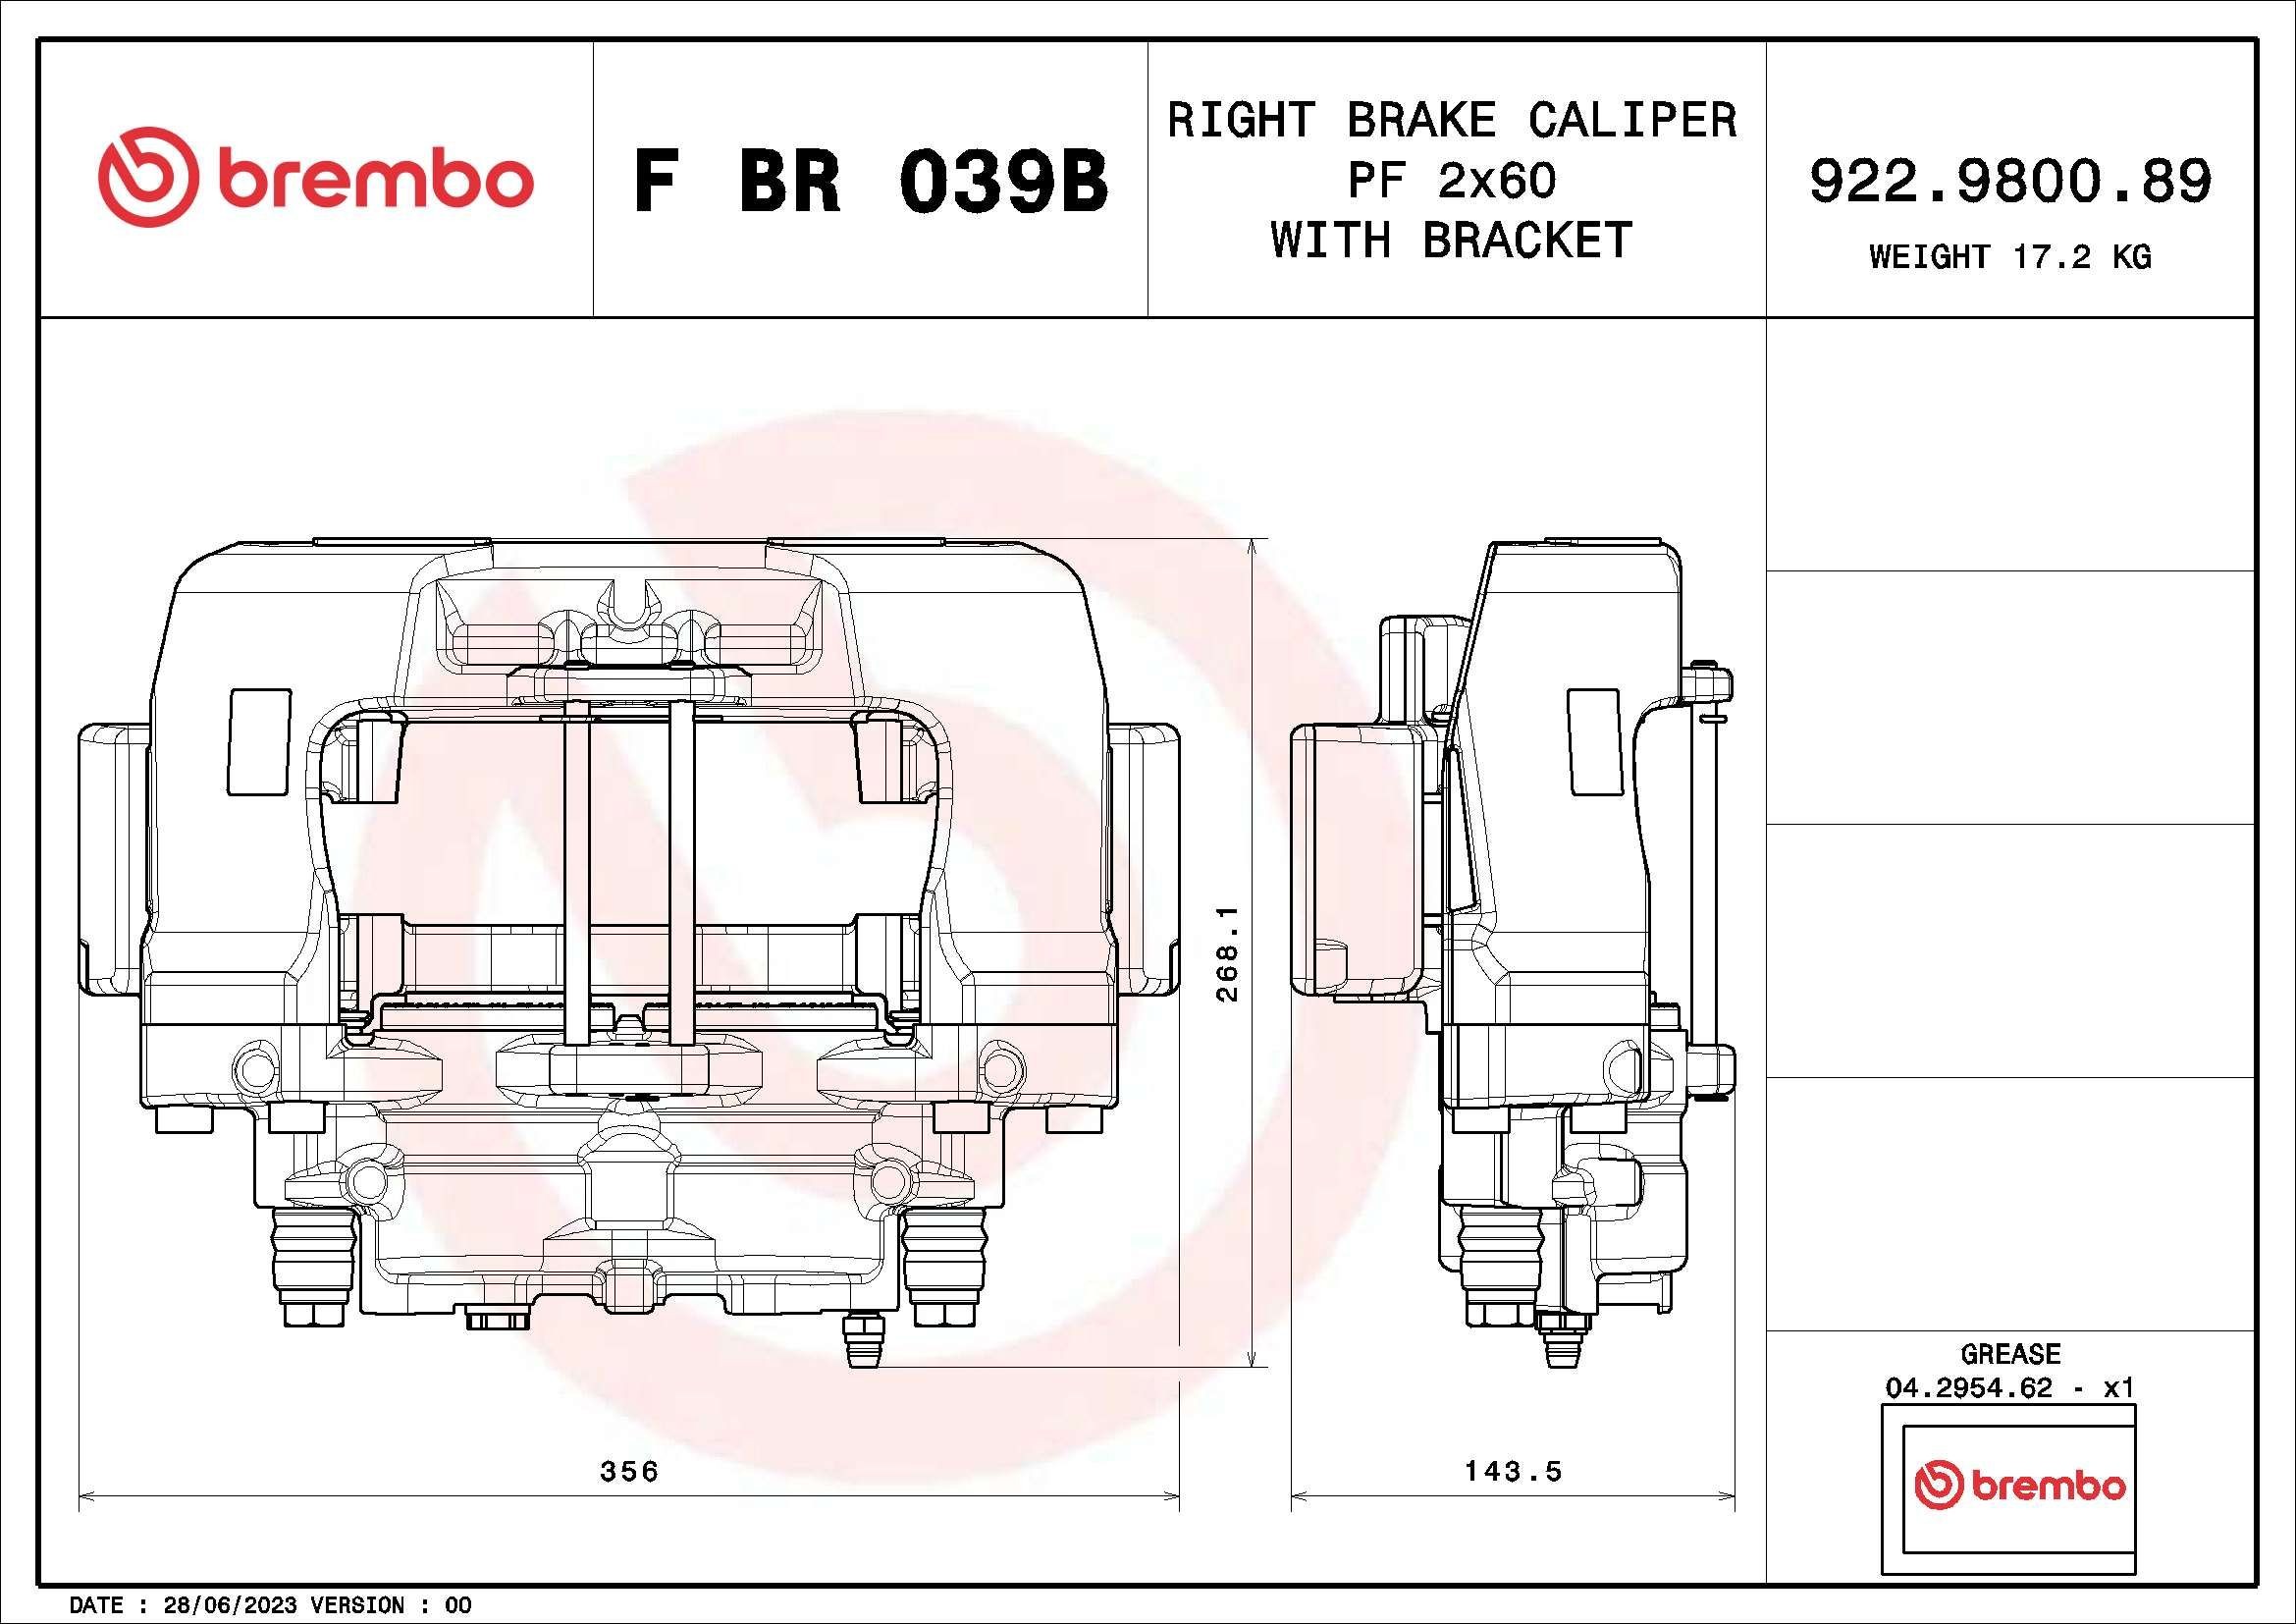 BREMBO Calipers F BR 039B